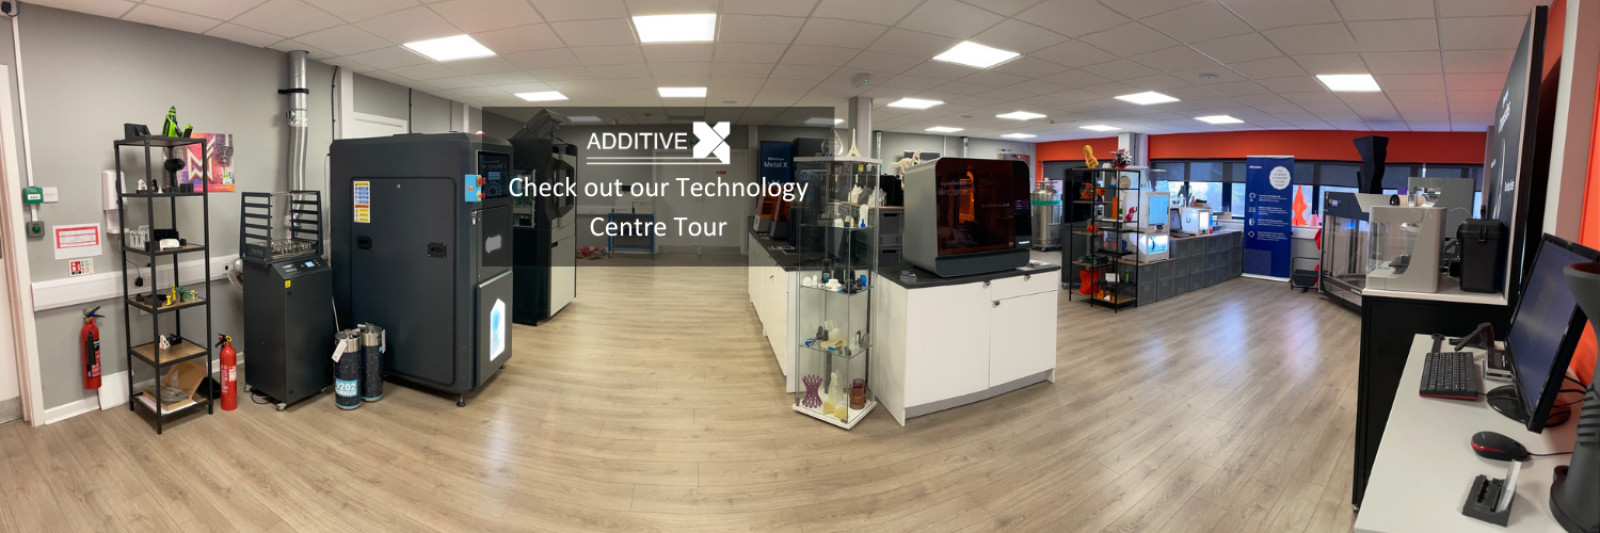 Additive-X Technology Centre